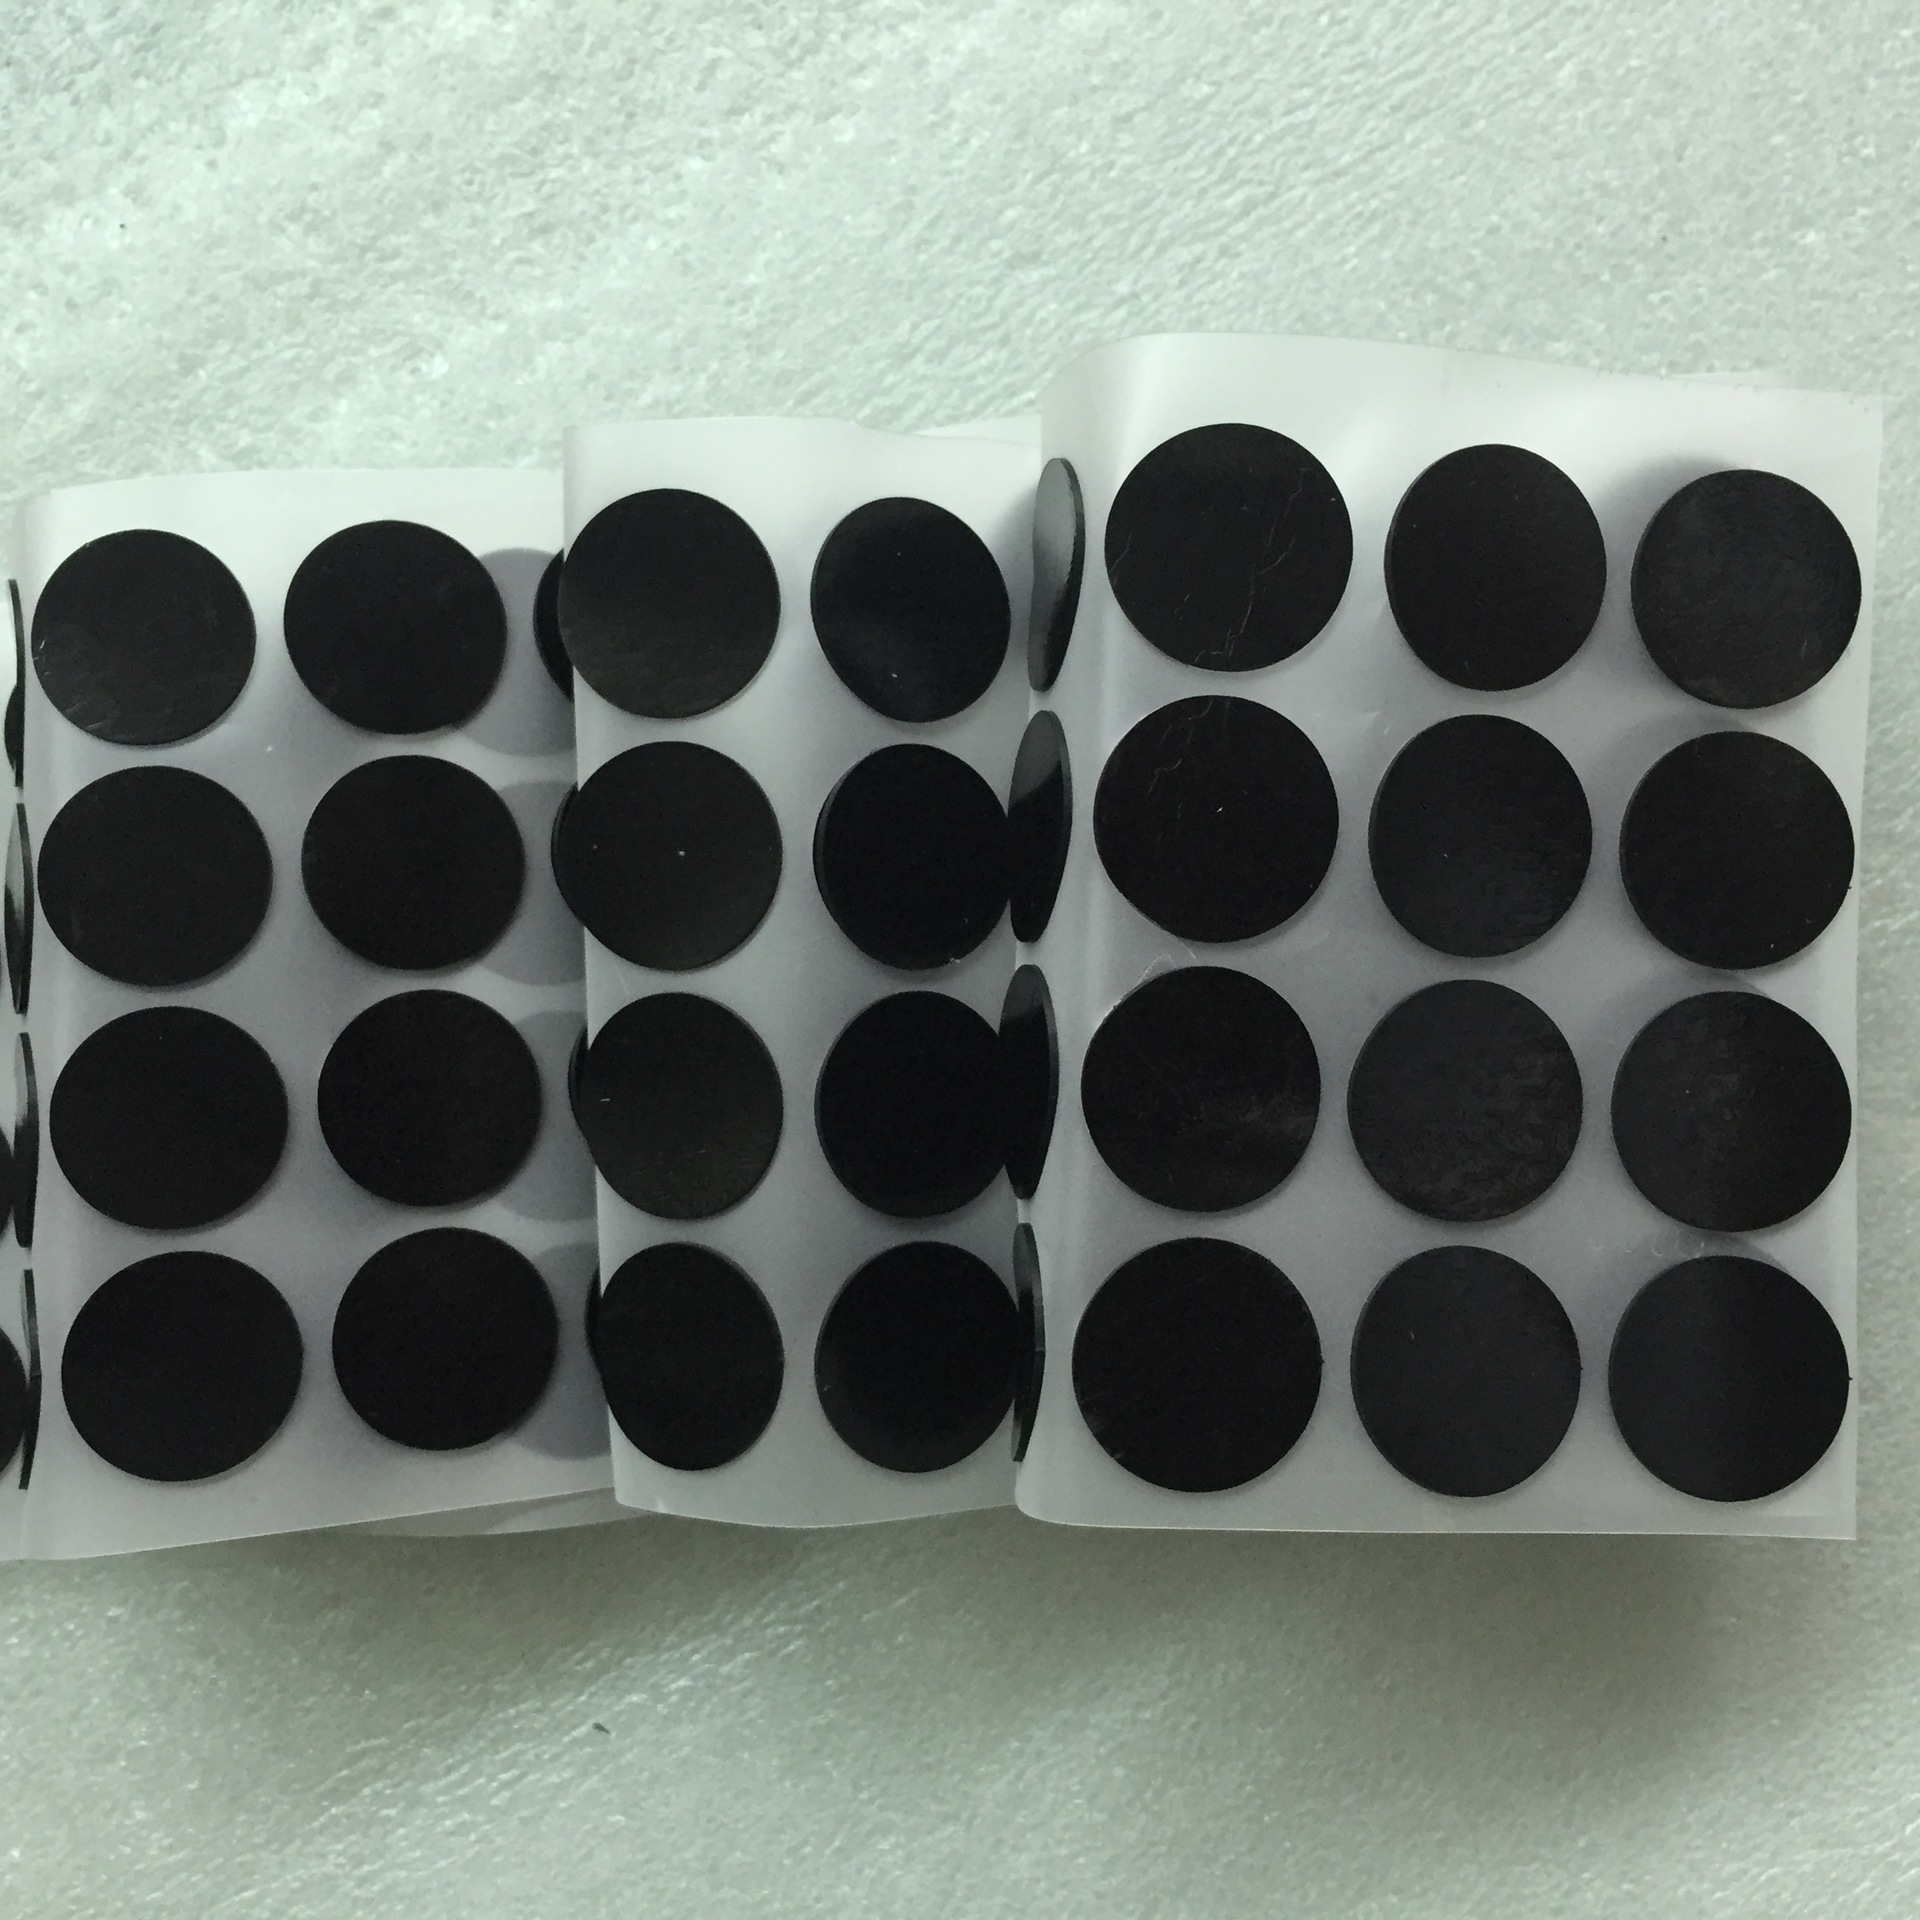 Manufactor supply black silica gel door mat circular transparent door mat seal up rubber door mat Free of charge